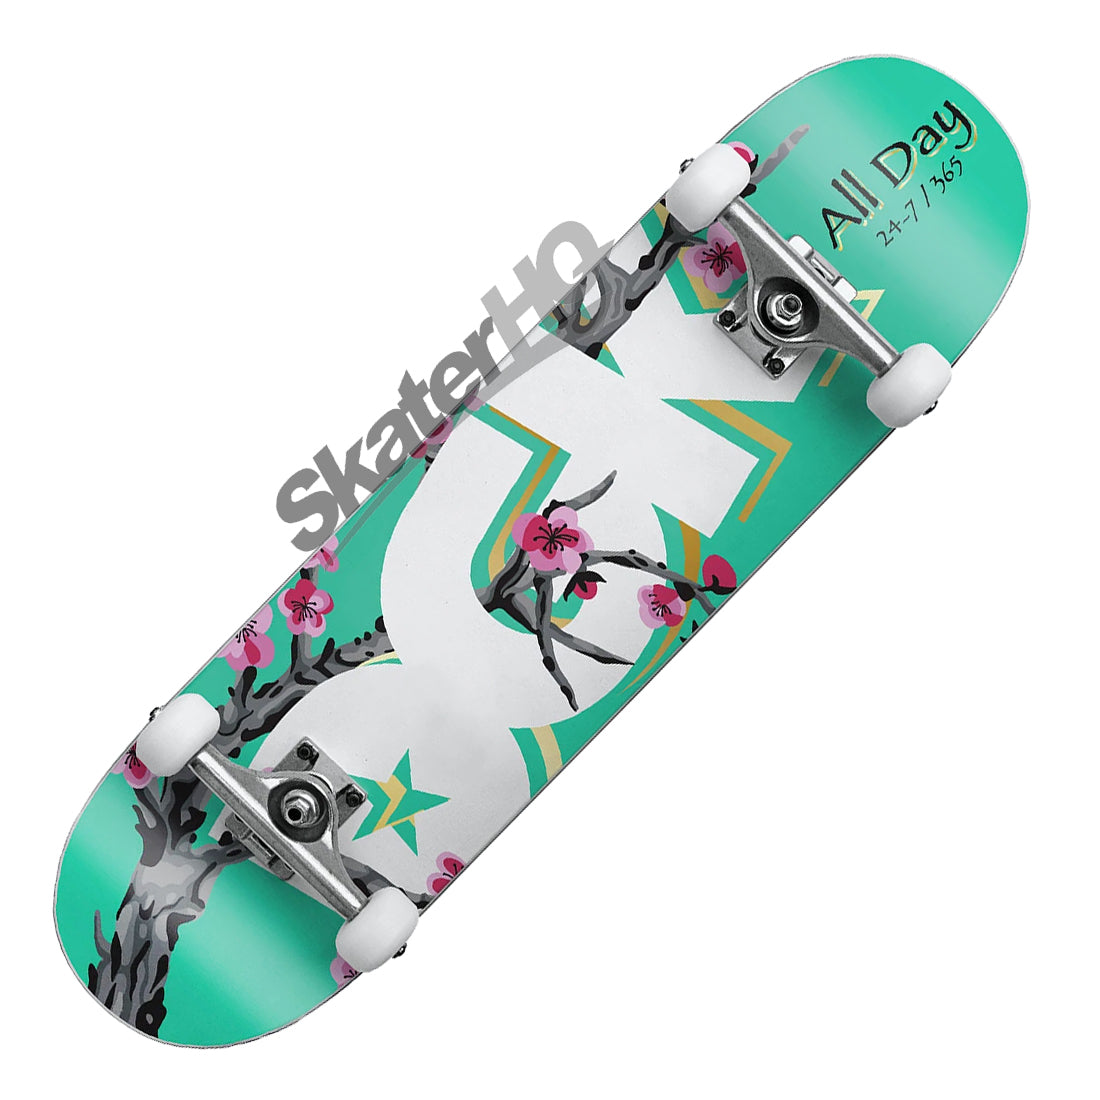 DGK Blossom 7.25 Complete - Turquoise Skateboard Completes Modern Street